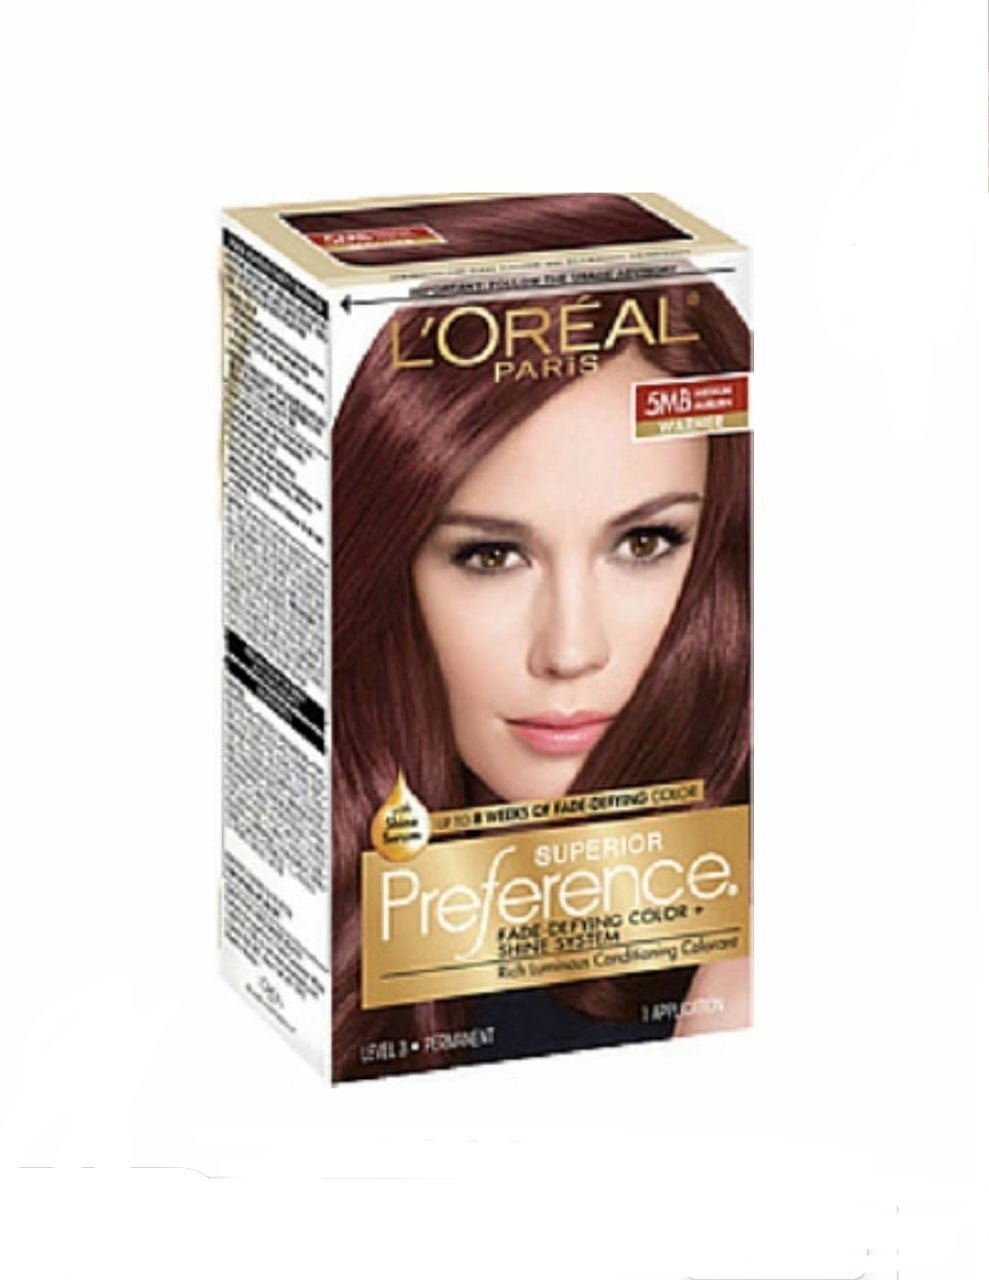 L´Oreal Paris Superior Preference Permanent Hair Color, 5MB Medium Auburn grCrsnsxh